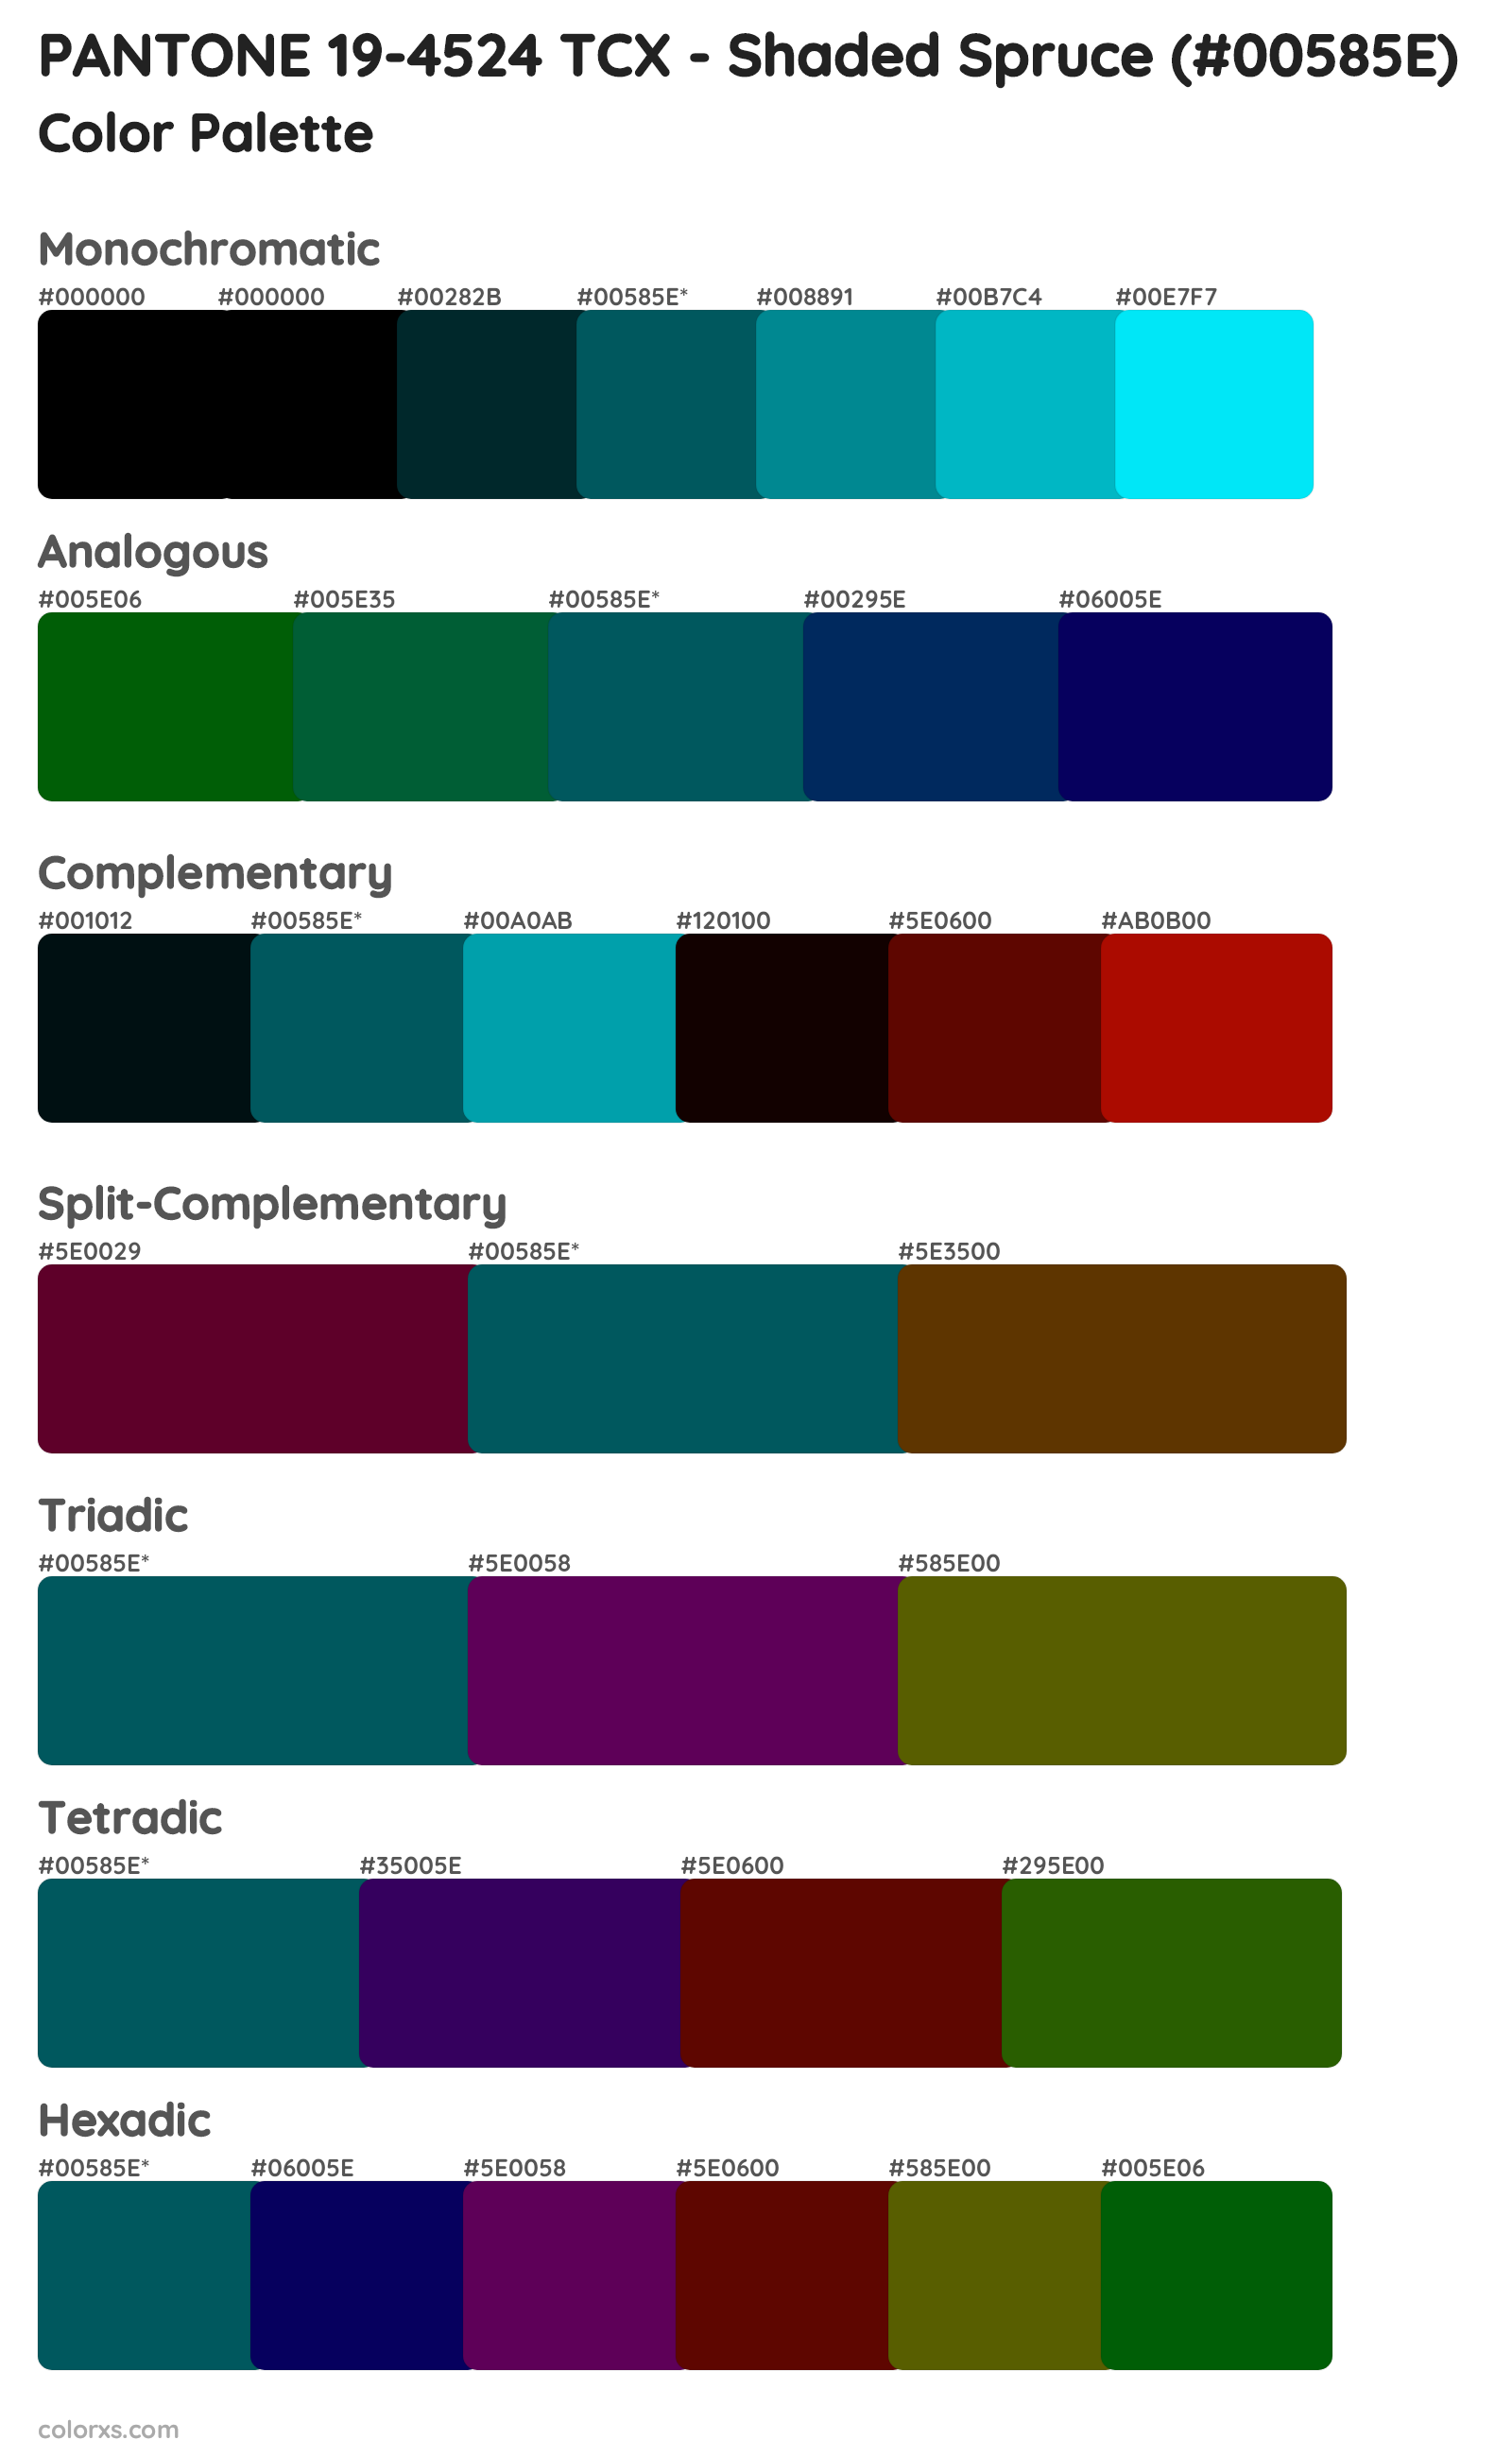 PANTONE 19-4524 TCX - Shaded Spruce Color Scheme Palettes